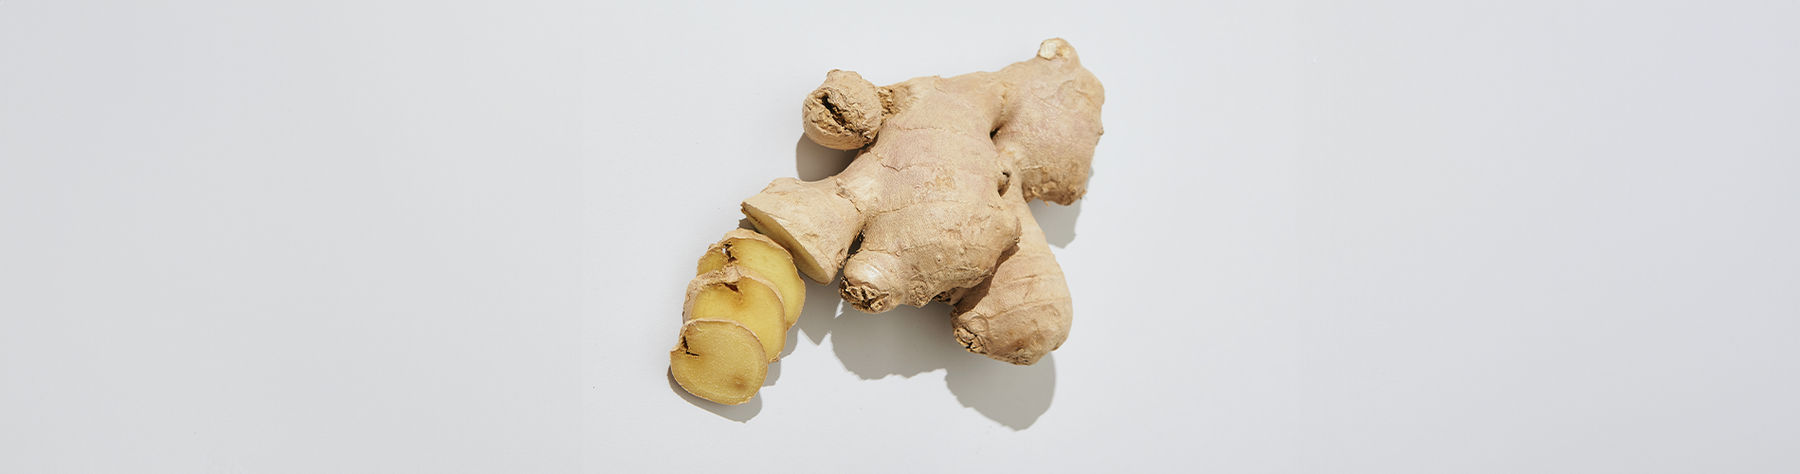 4 Health Benefits of Ginger